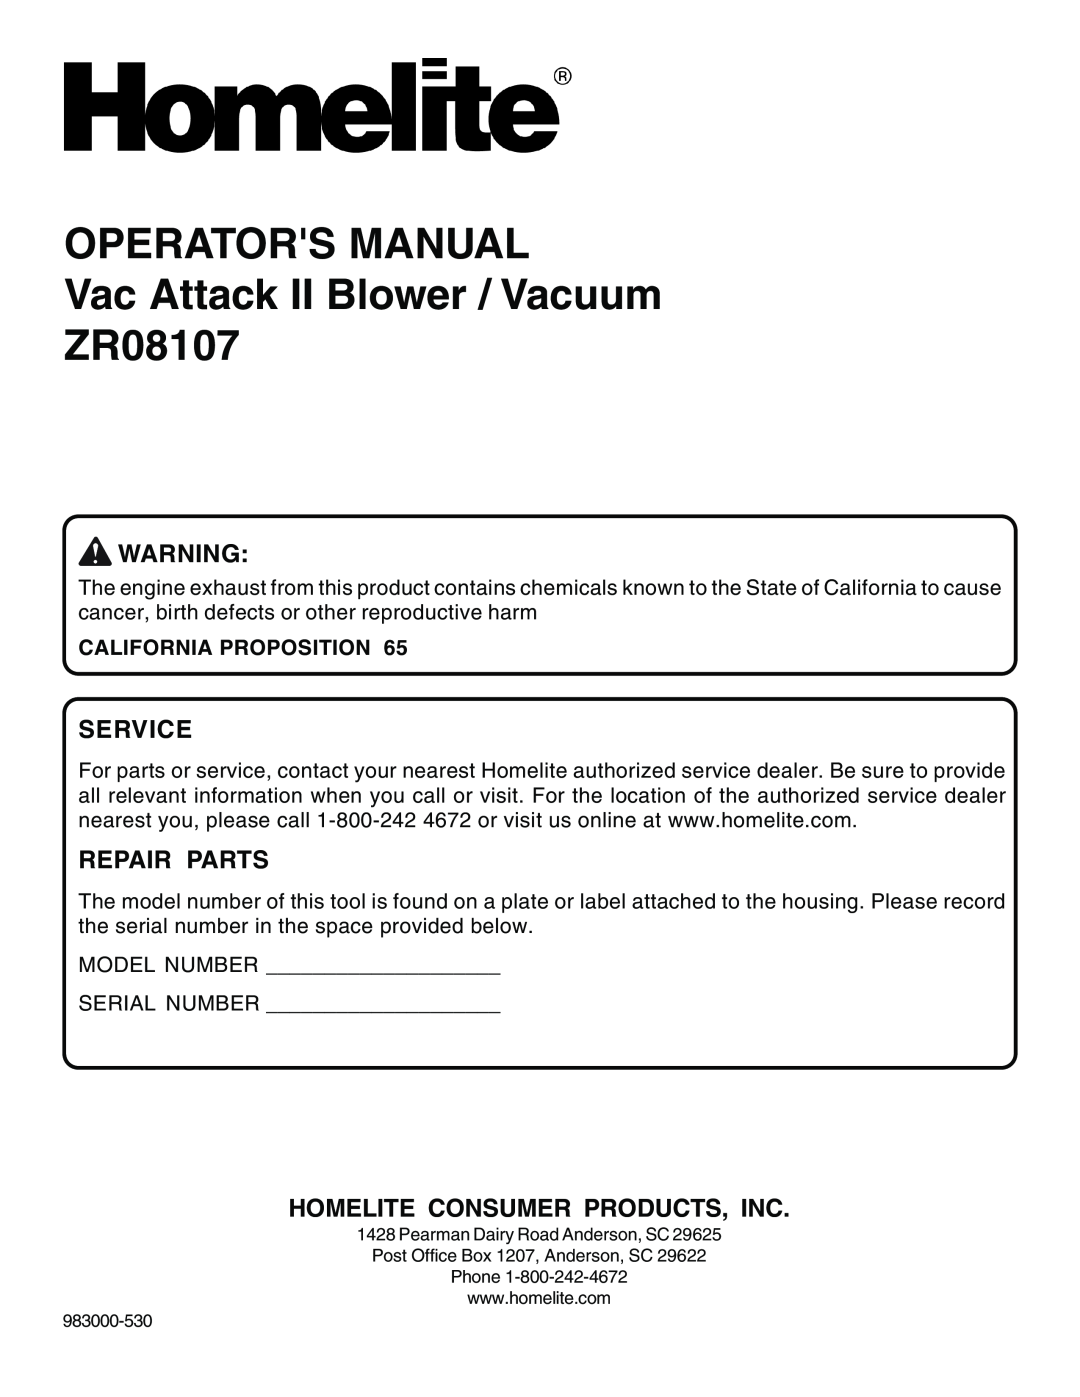 Homelite ZR08107 Service, Repair Parts, Homelite Consumer Products, Inc, OPERATORS MANUAL Vac Attack II Blower / Vacuum 